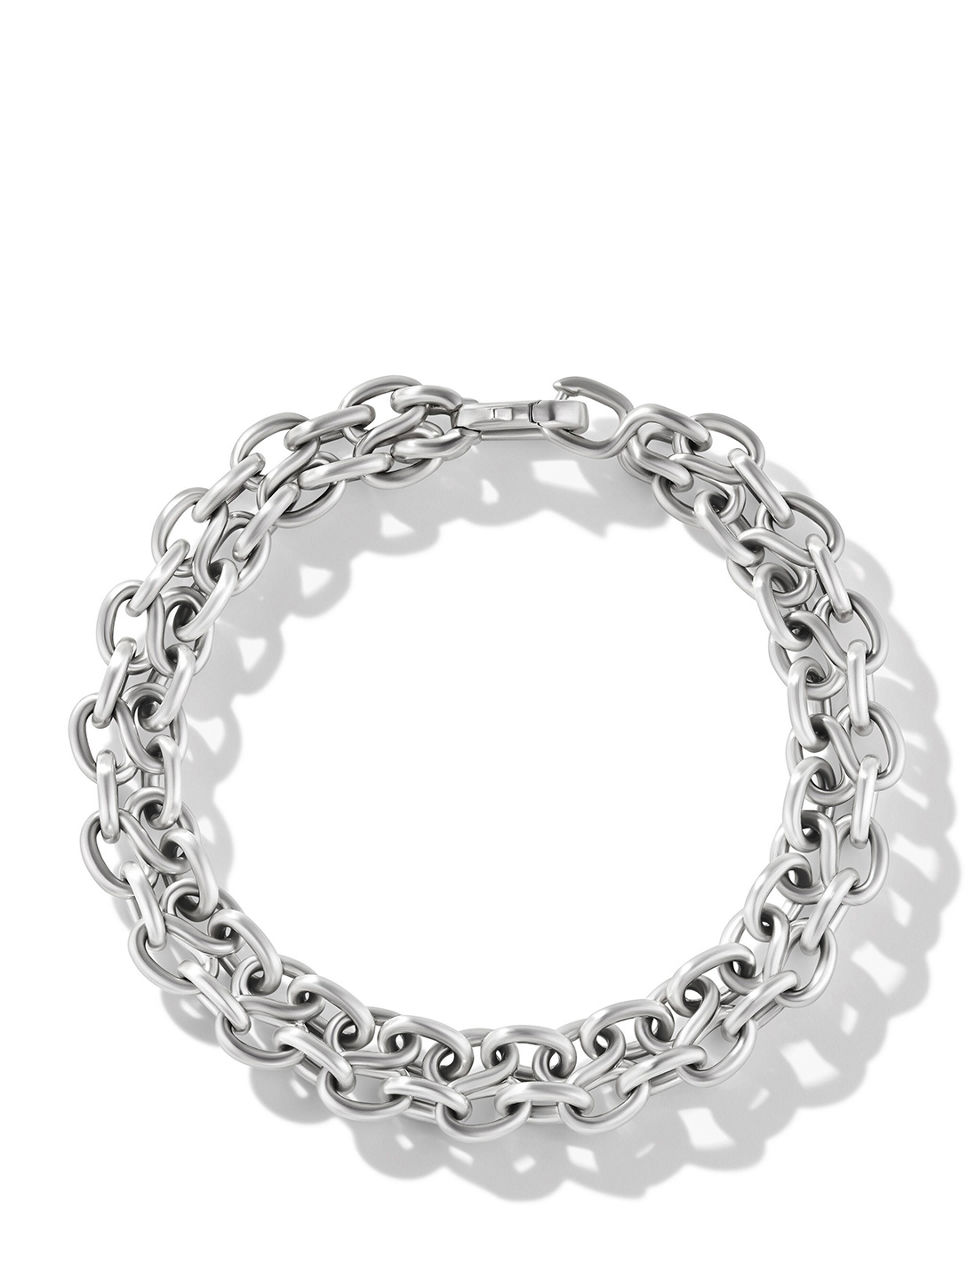 Shipwreck Chain Bracelet In Sterling Silver